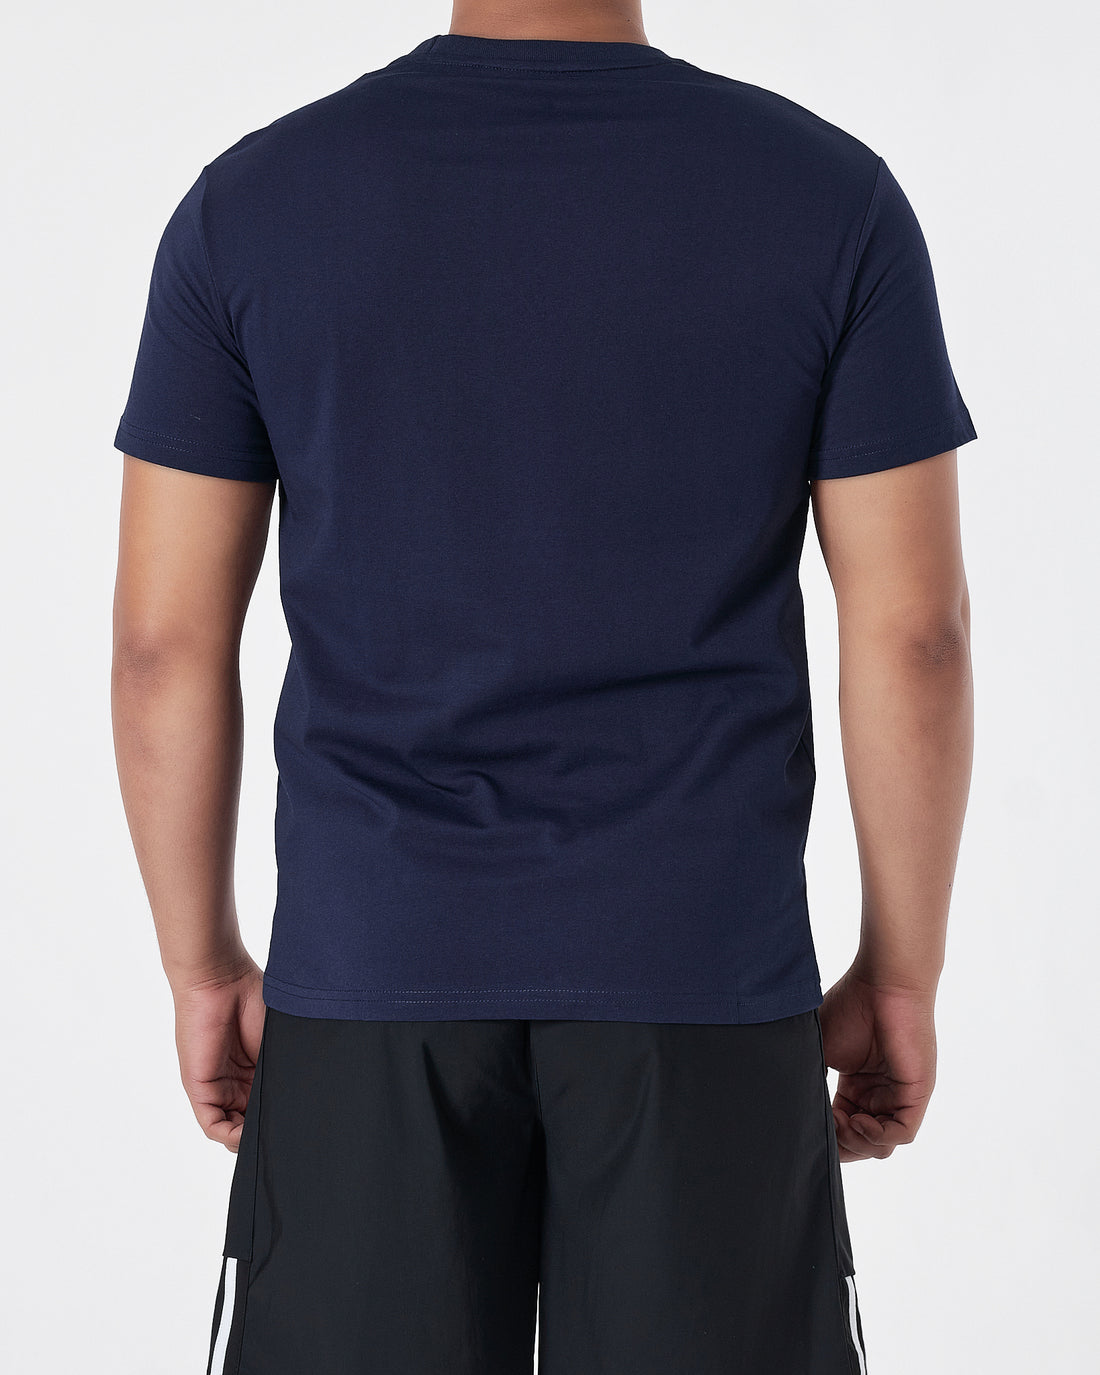 ADI Logo Embroidered Men Blue Sport T-Shirt 14.90